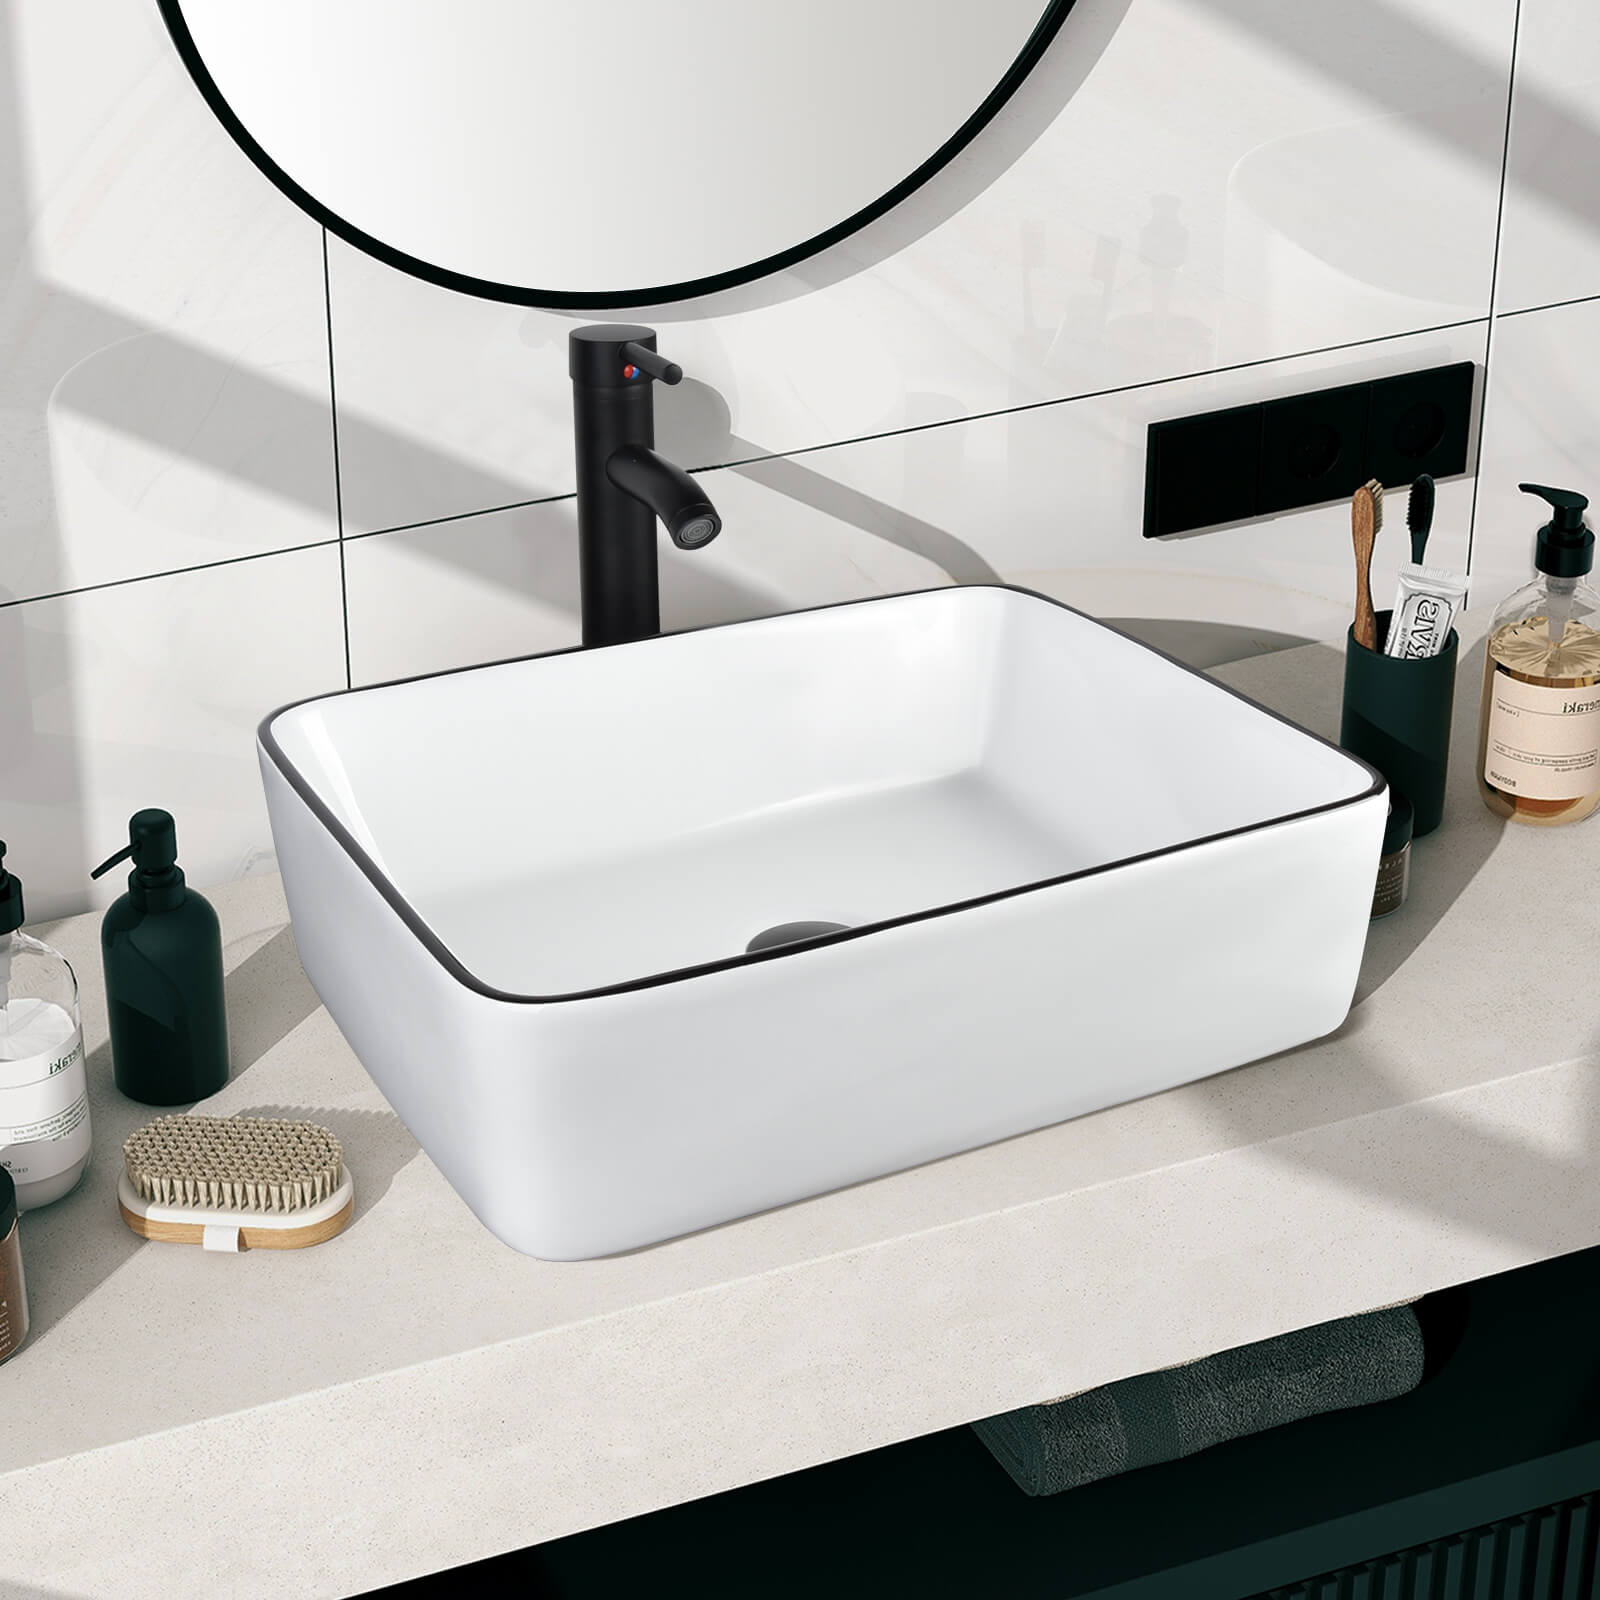 Elecwish white ceramic sink HW1125 displays in bathroom